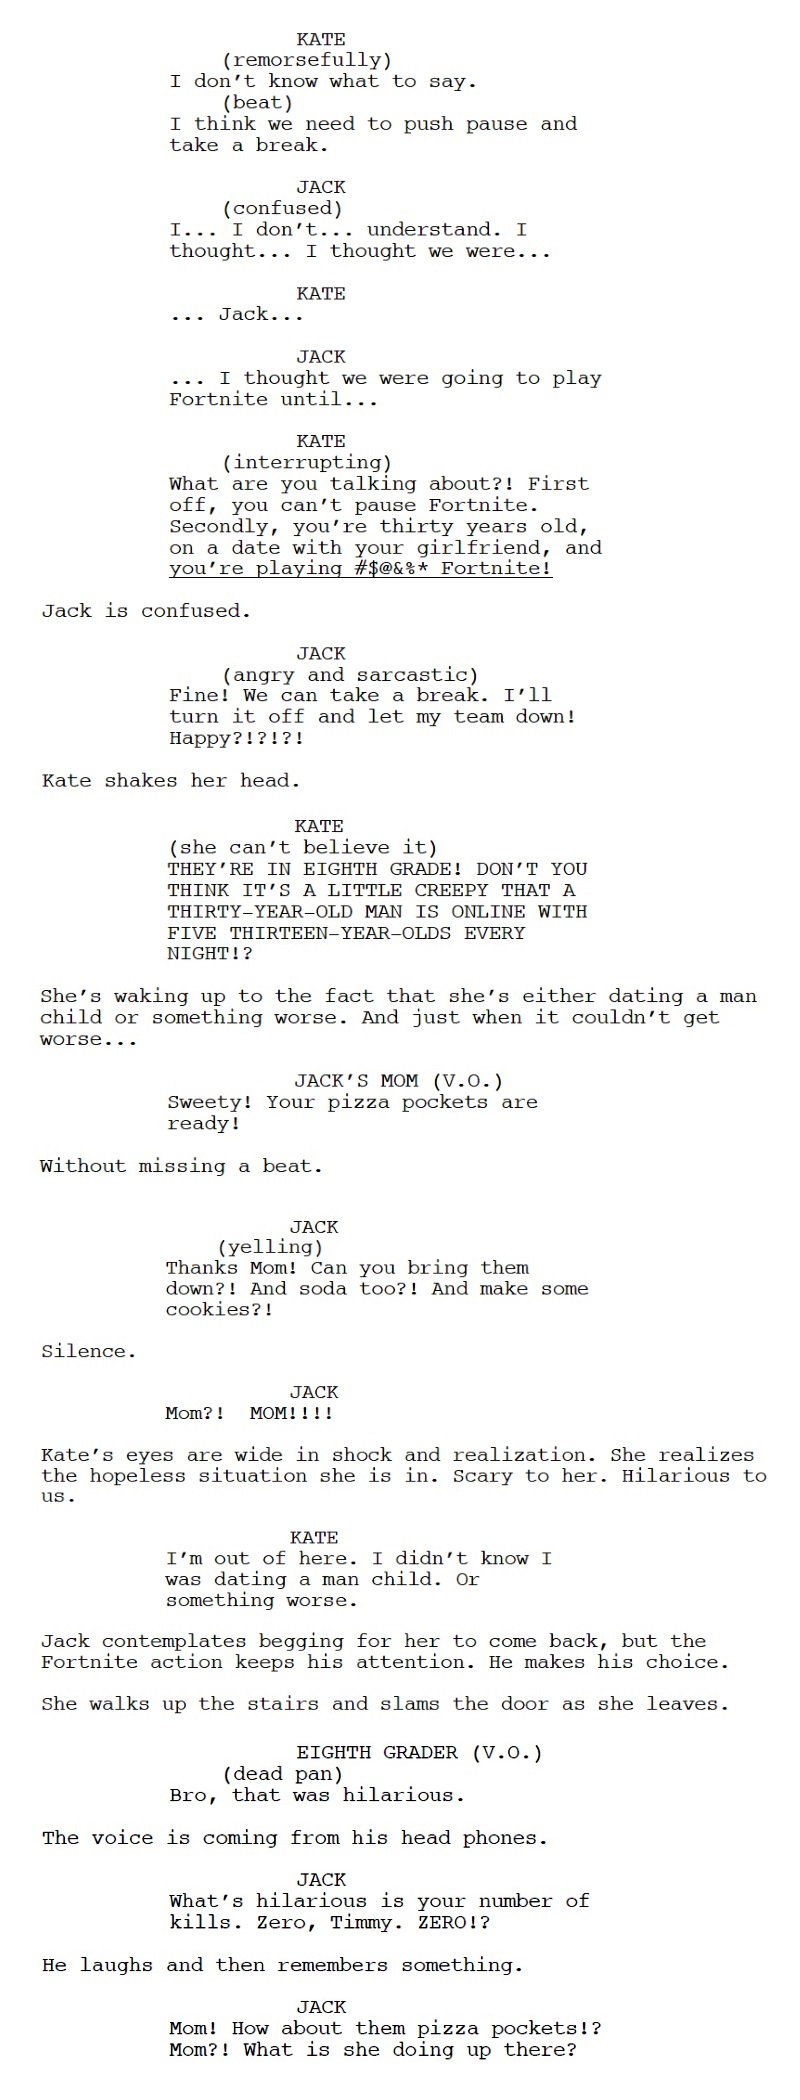 script dialogue between two people